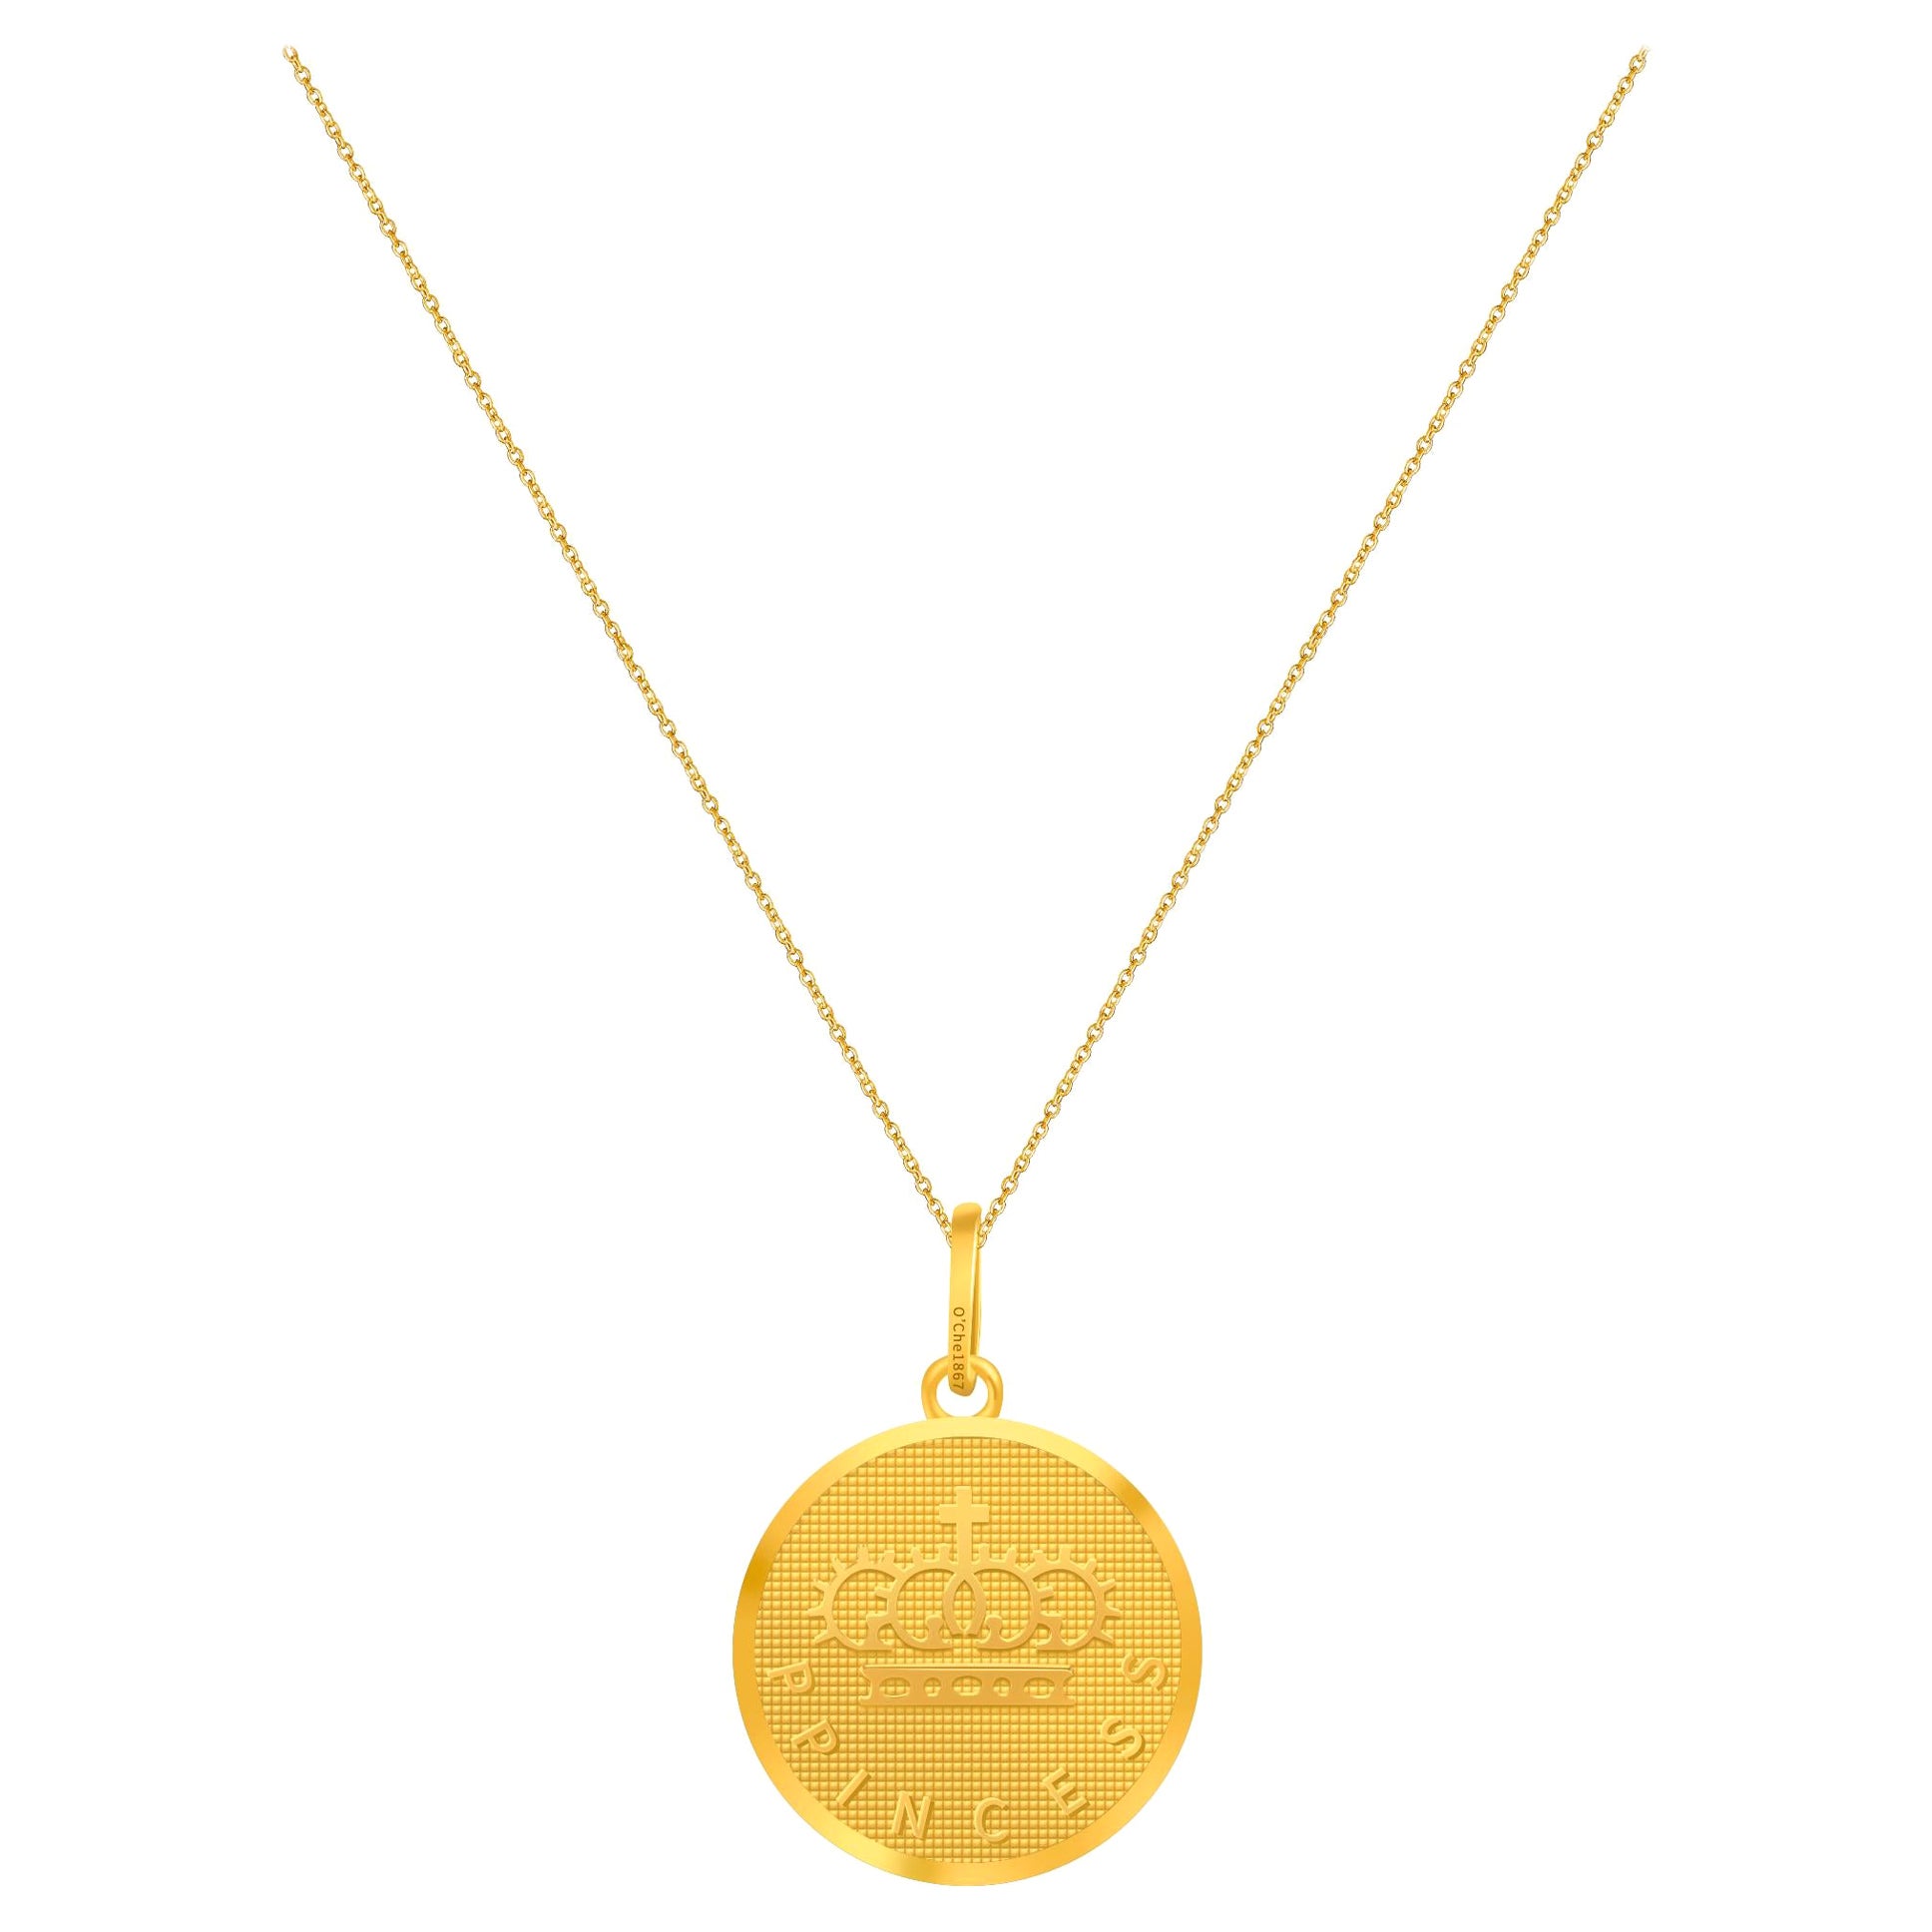 18 Karat Rose Gold Pendant with Necklace